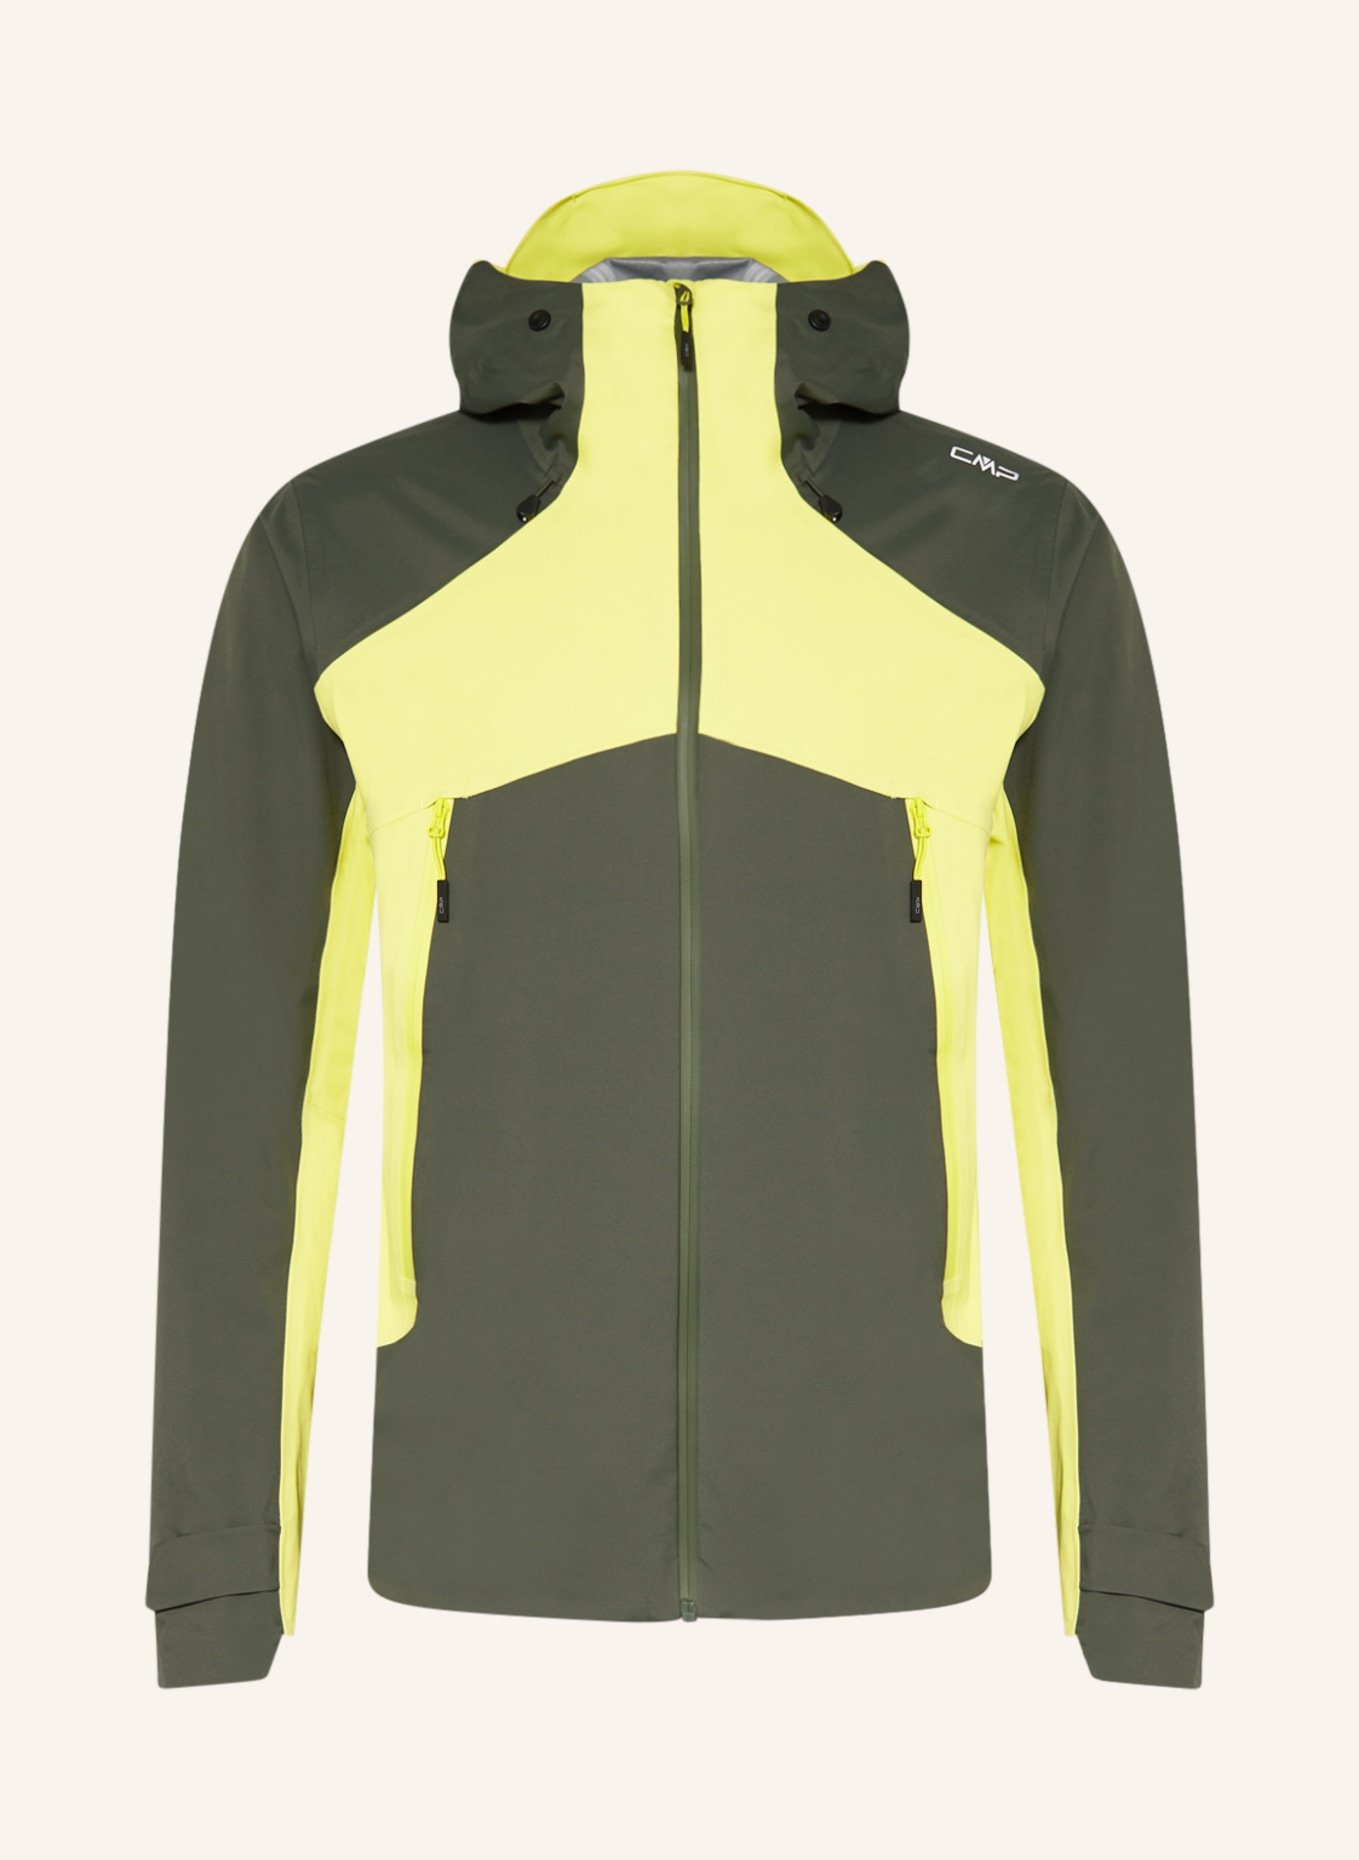 CMP Outdoor jacket in khaki/ yellow